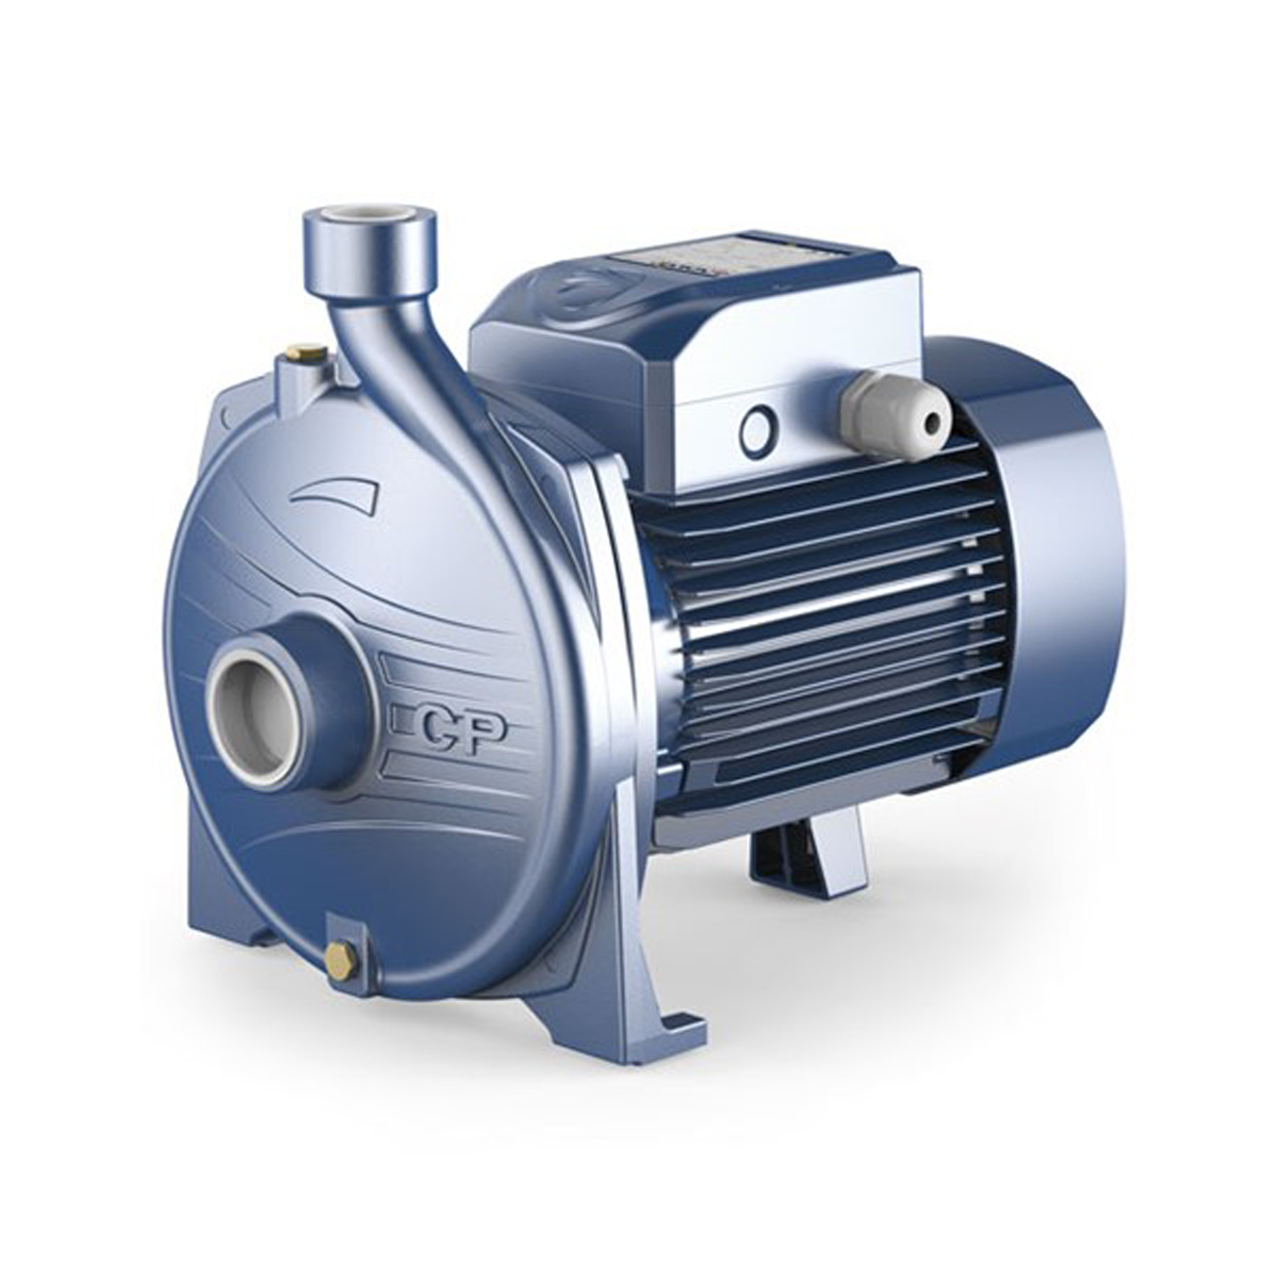 Water pump - PK - Pedrollo - electric / centrifugal / peripheral